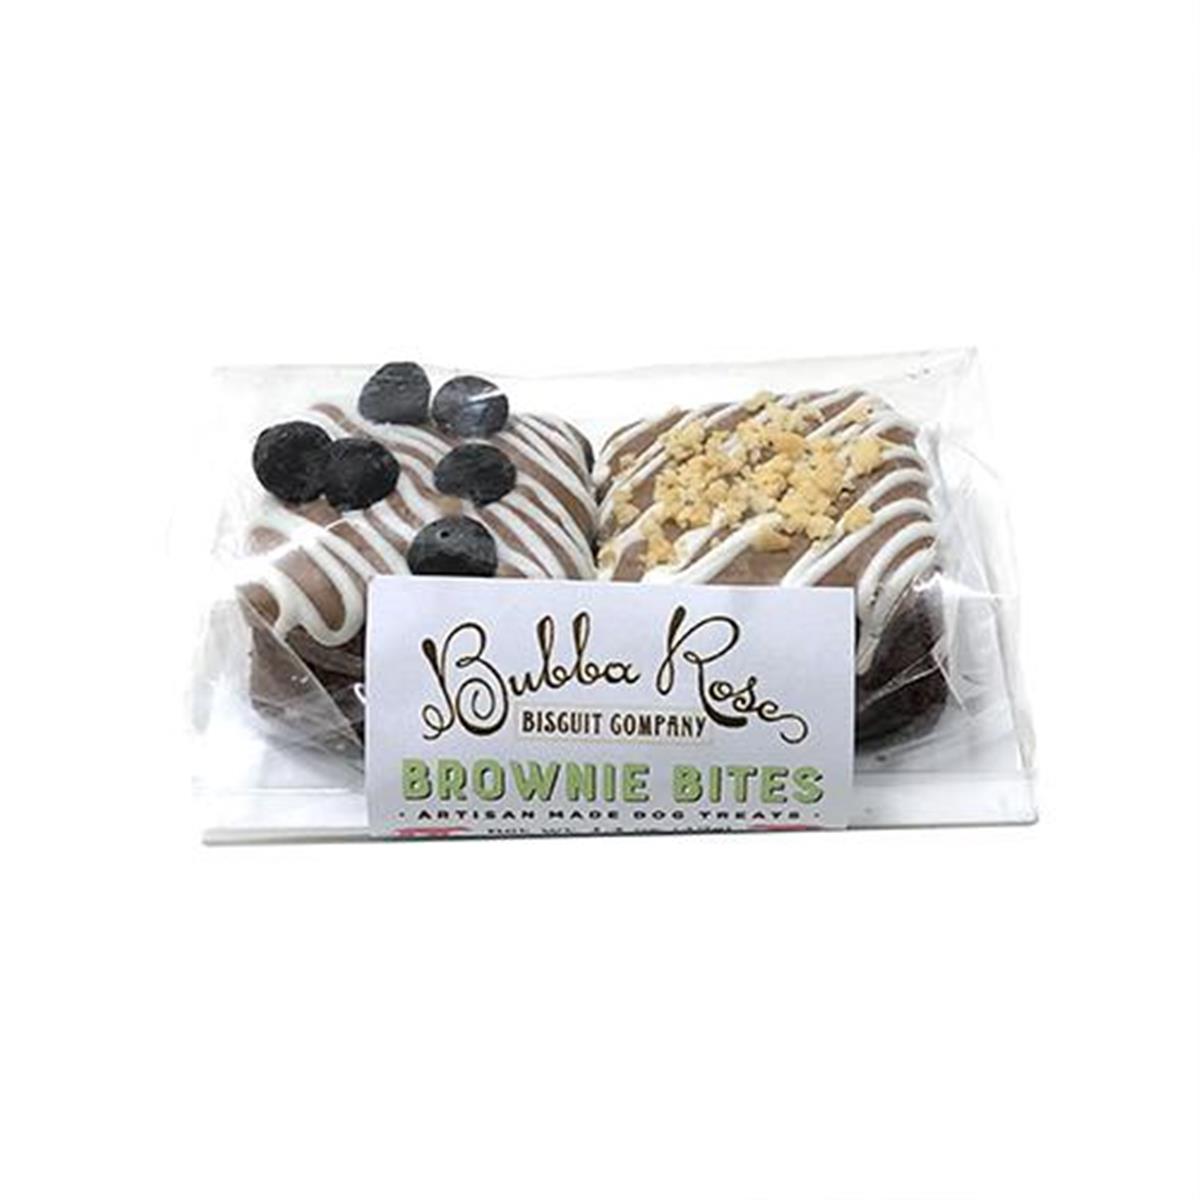 2pkbrb Brownie Bites - Pack Of 2